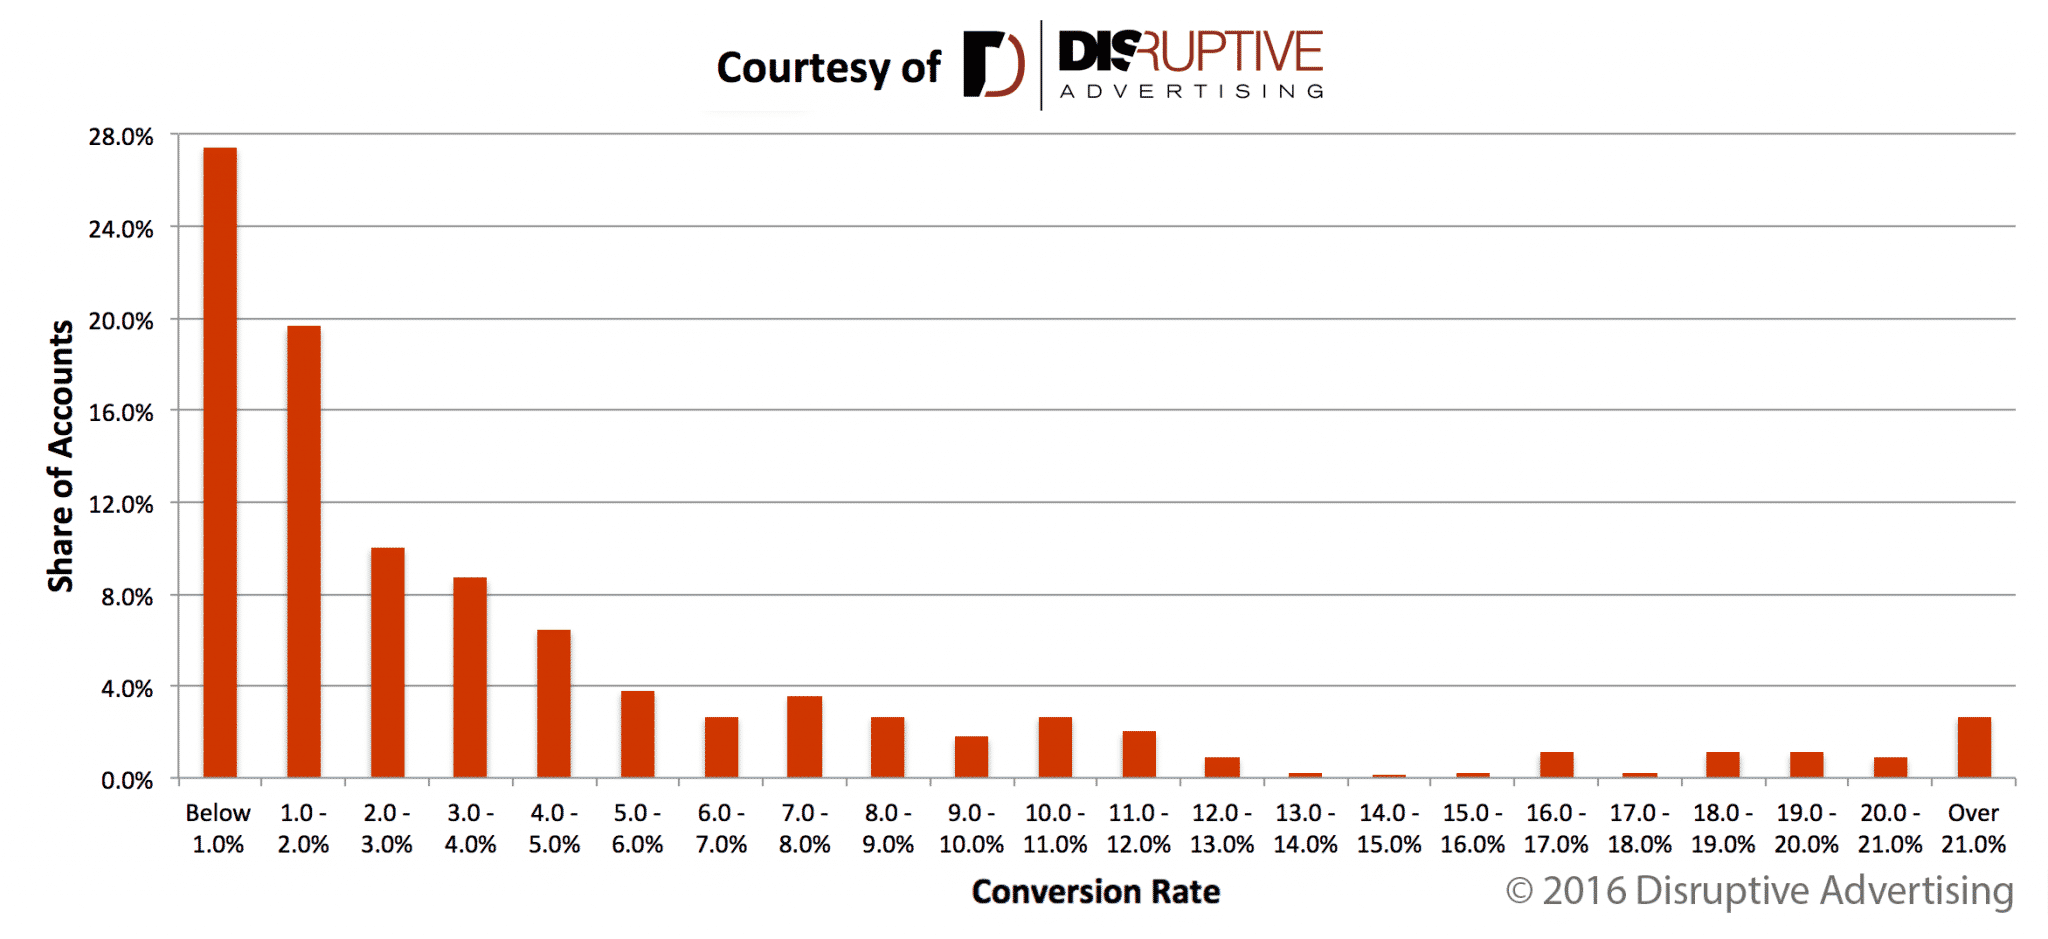 AdWords Conversion Rate Distribution | Disruptive Advertising